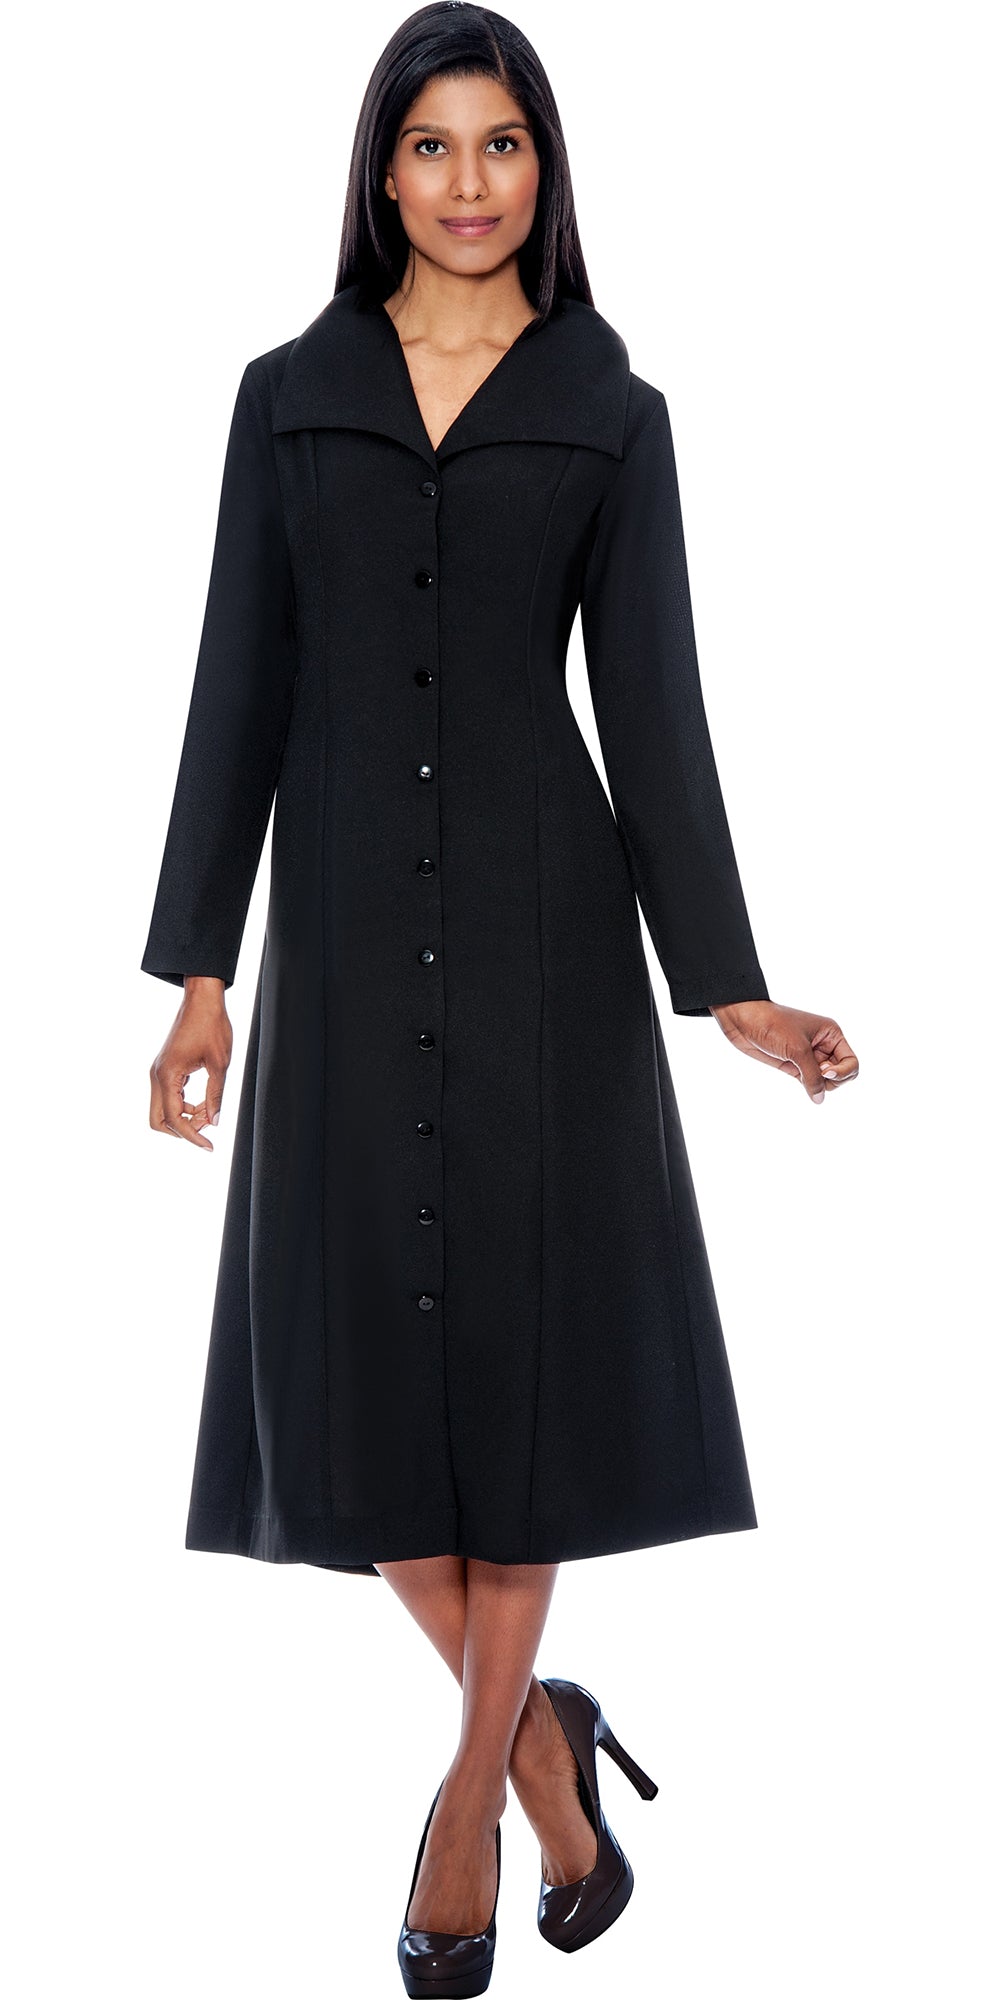 GMI G11573-Black - Wide Collar One Piece Dress For Church